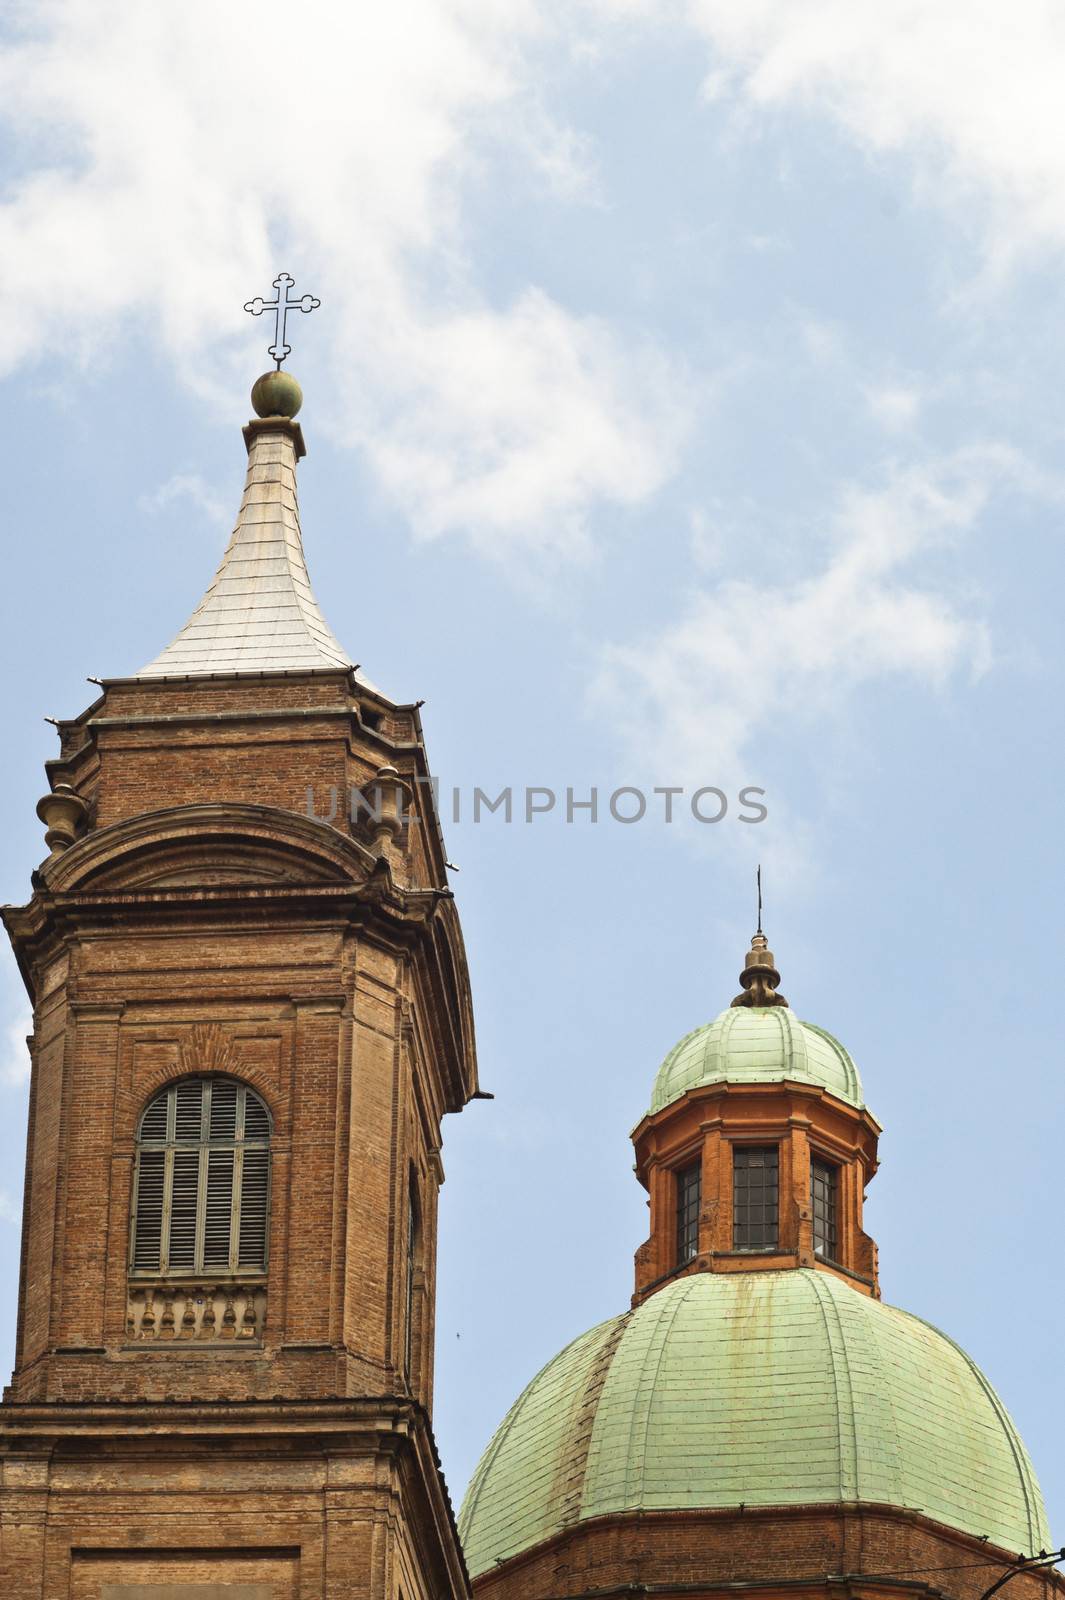 Dome near asinelli tower in Bologna by gandolfocannatella